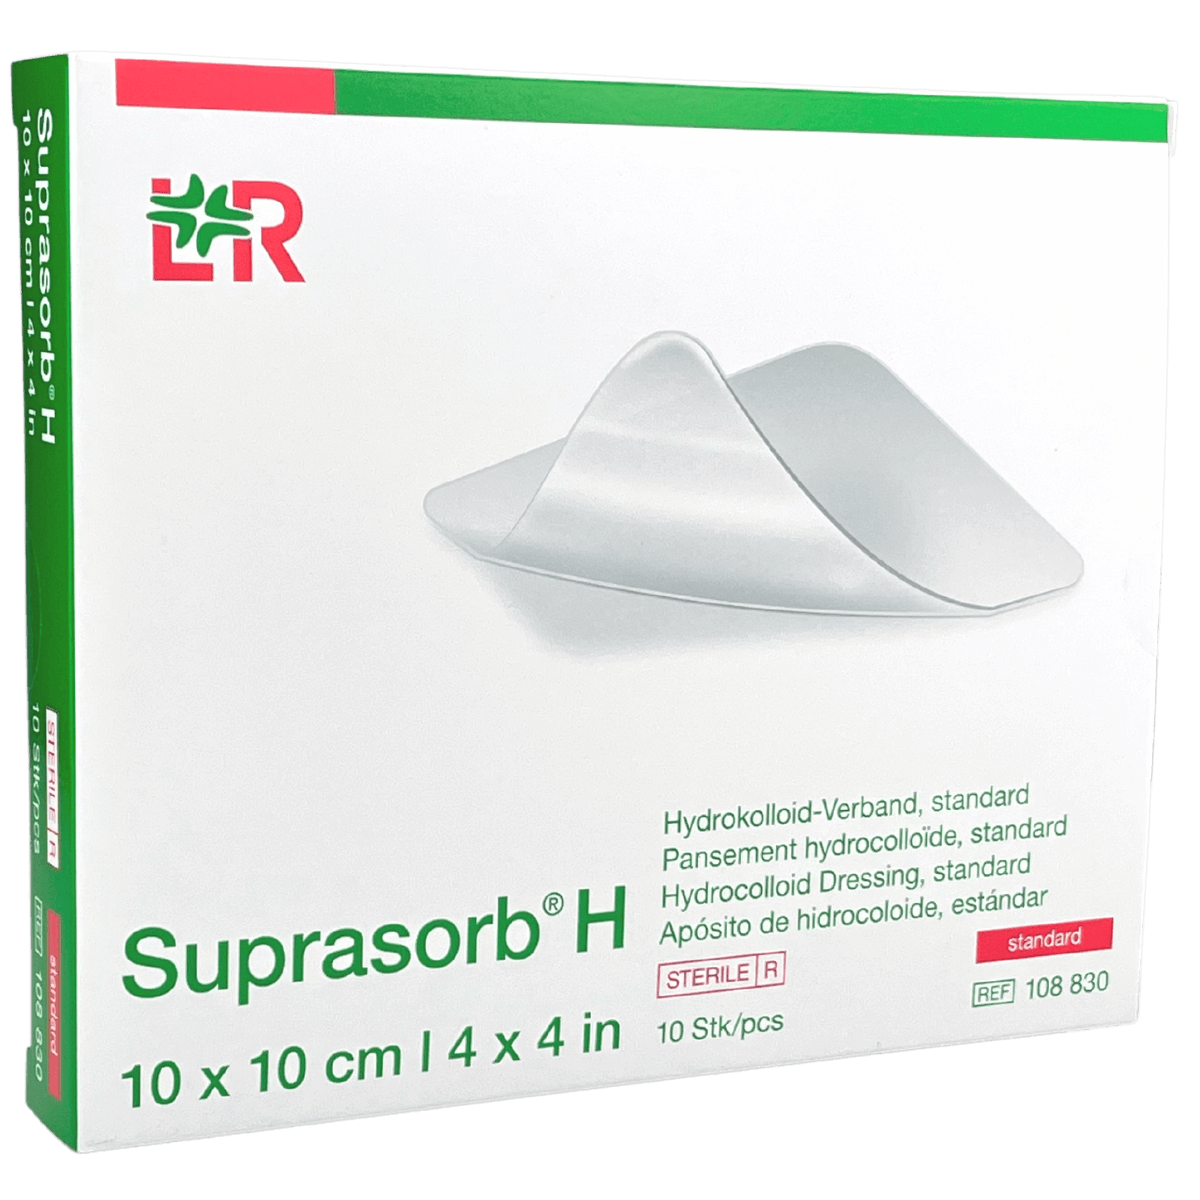 Suprasorb H 10x10